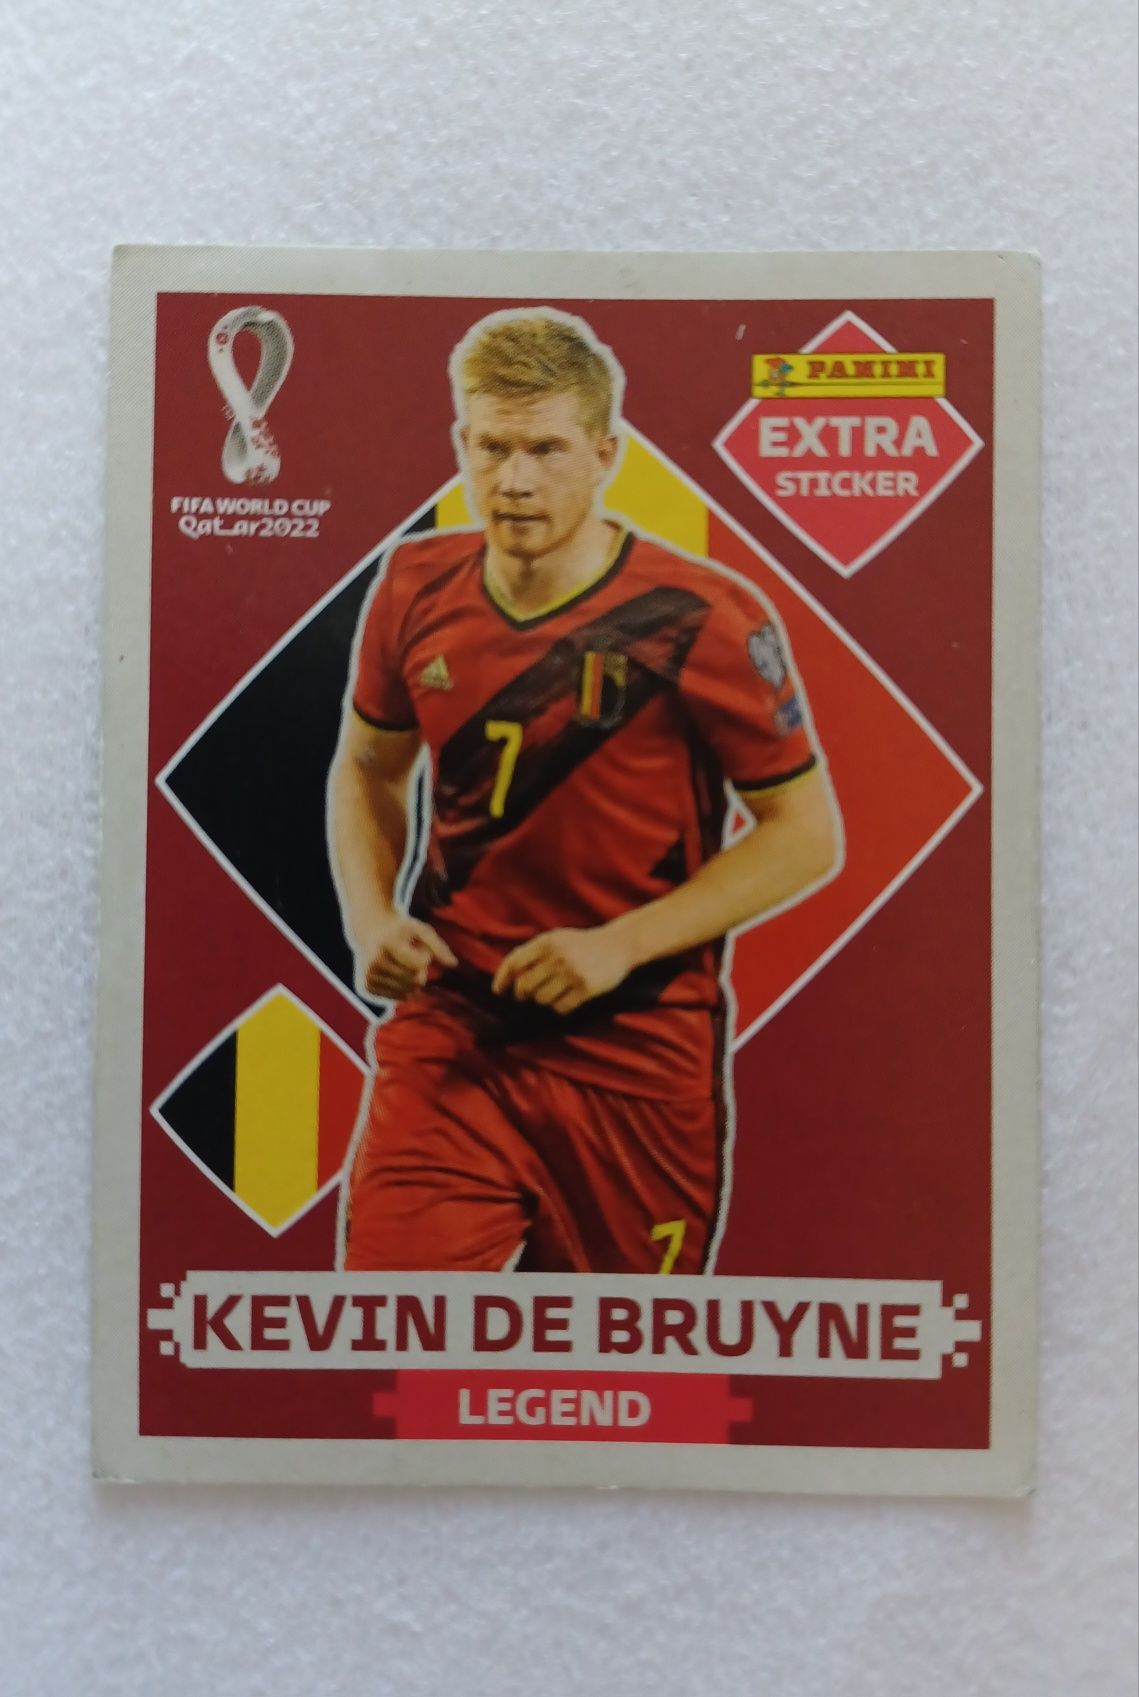 Fifa world cup extra sticker De bruyne (base) reyna (base)